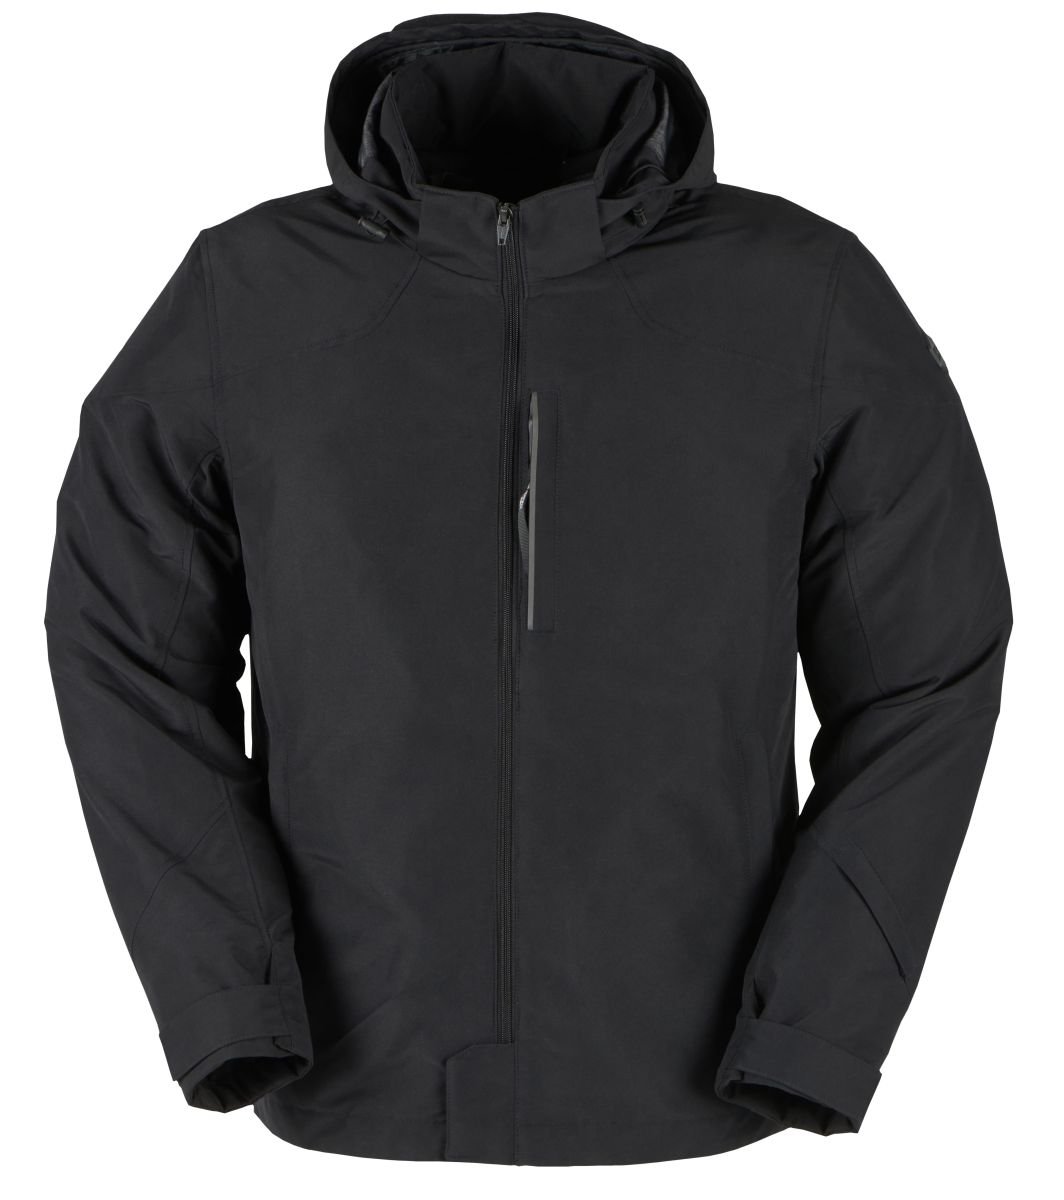 Image of Furygan London Evo 2 Jacket Black Size L EN